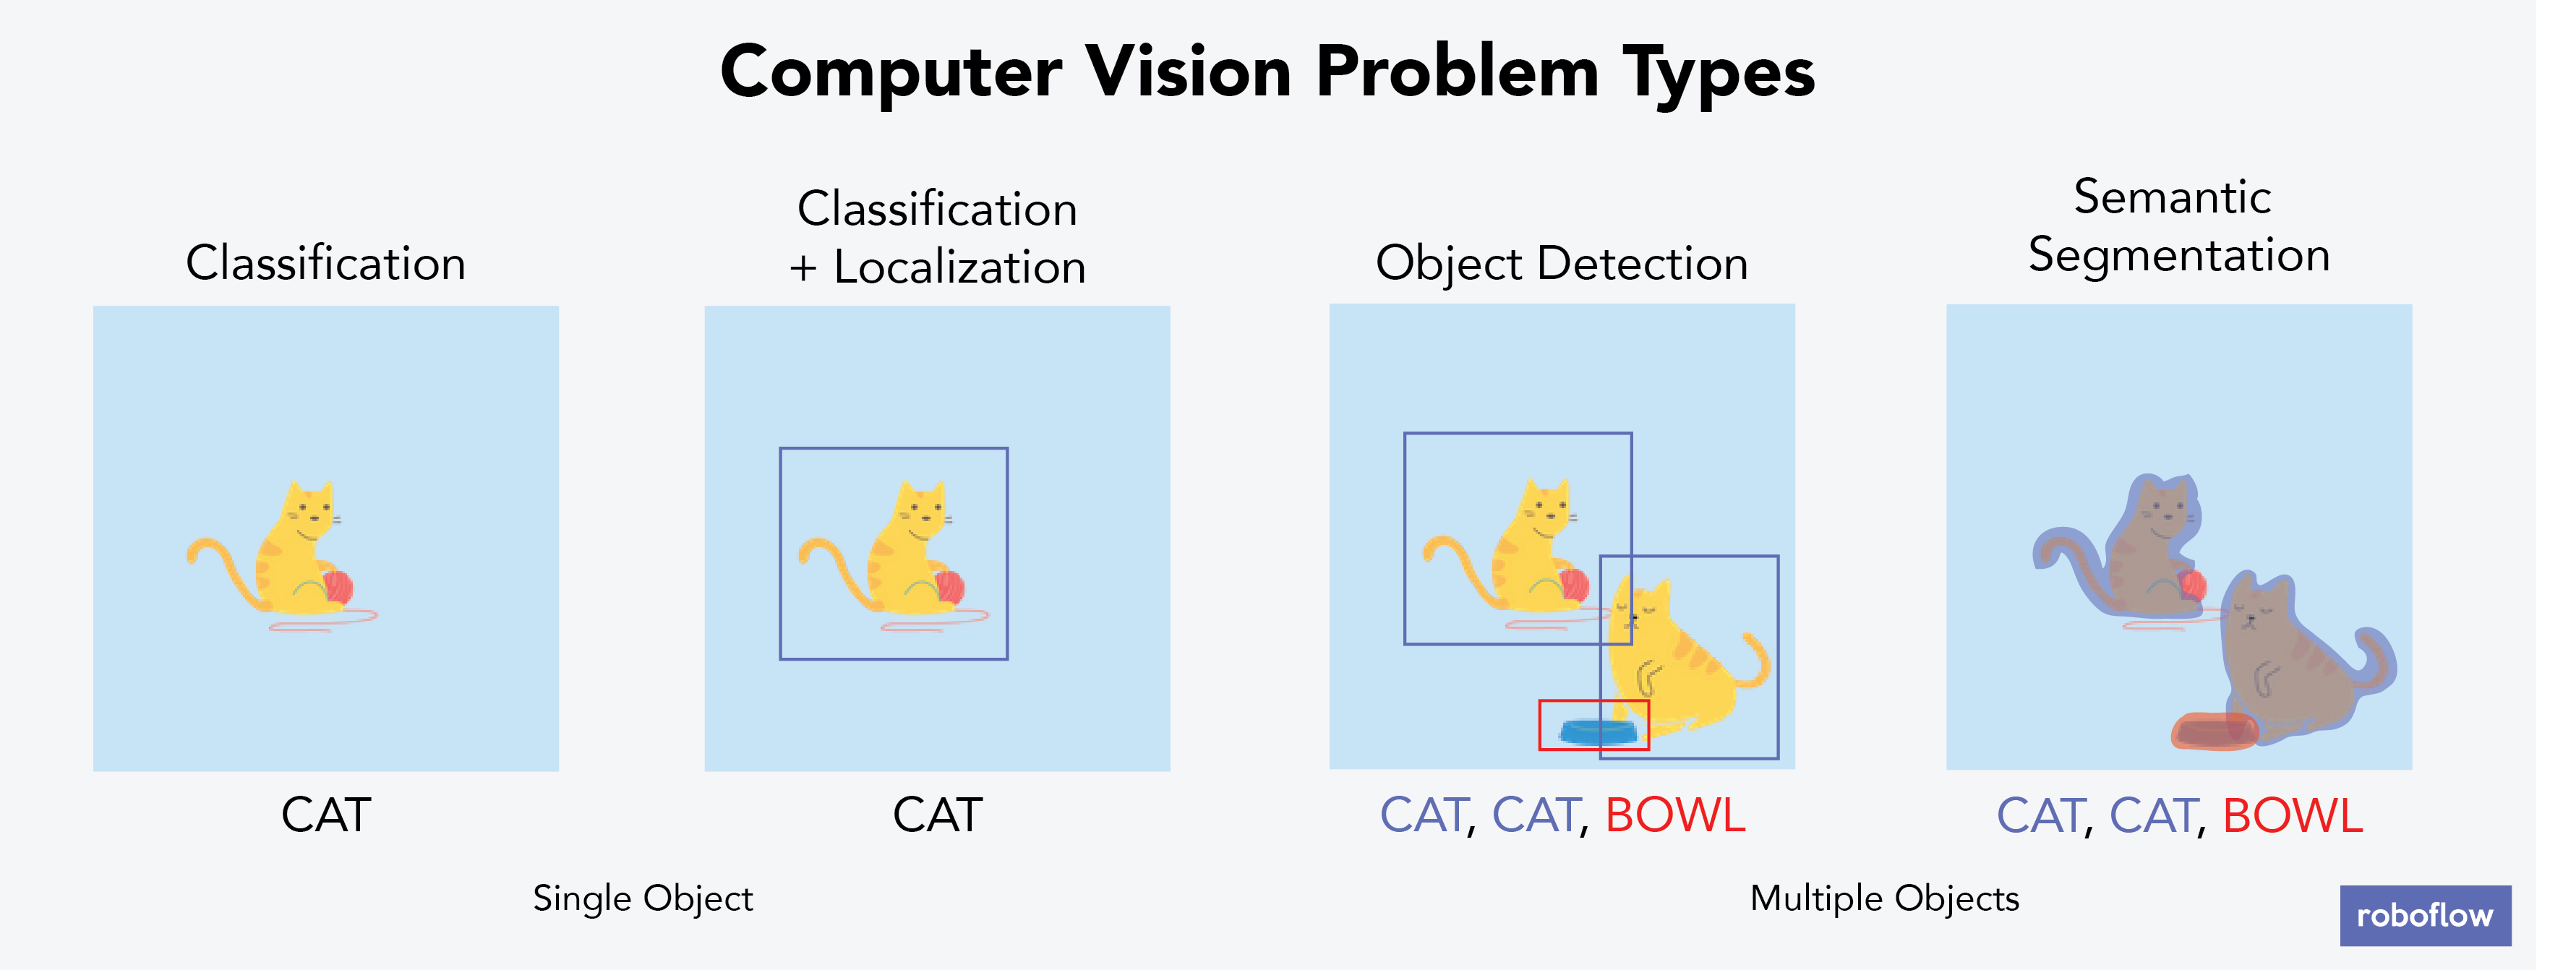 Computer Vision Problem Types (Classification, Classification + Localization, Object Detection, Semantic Segmentation)